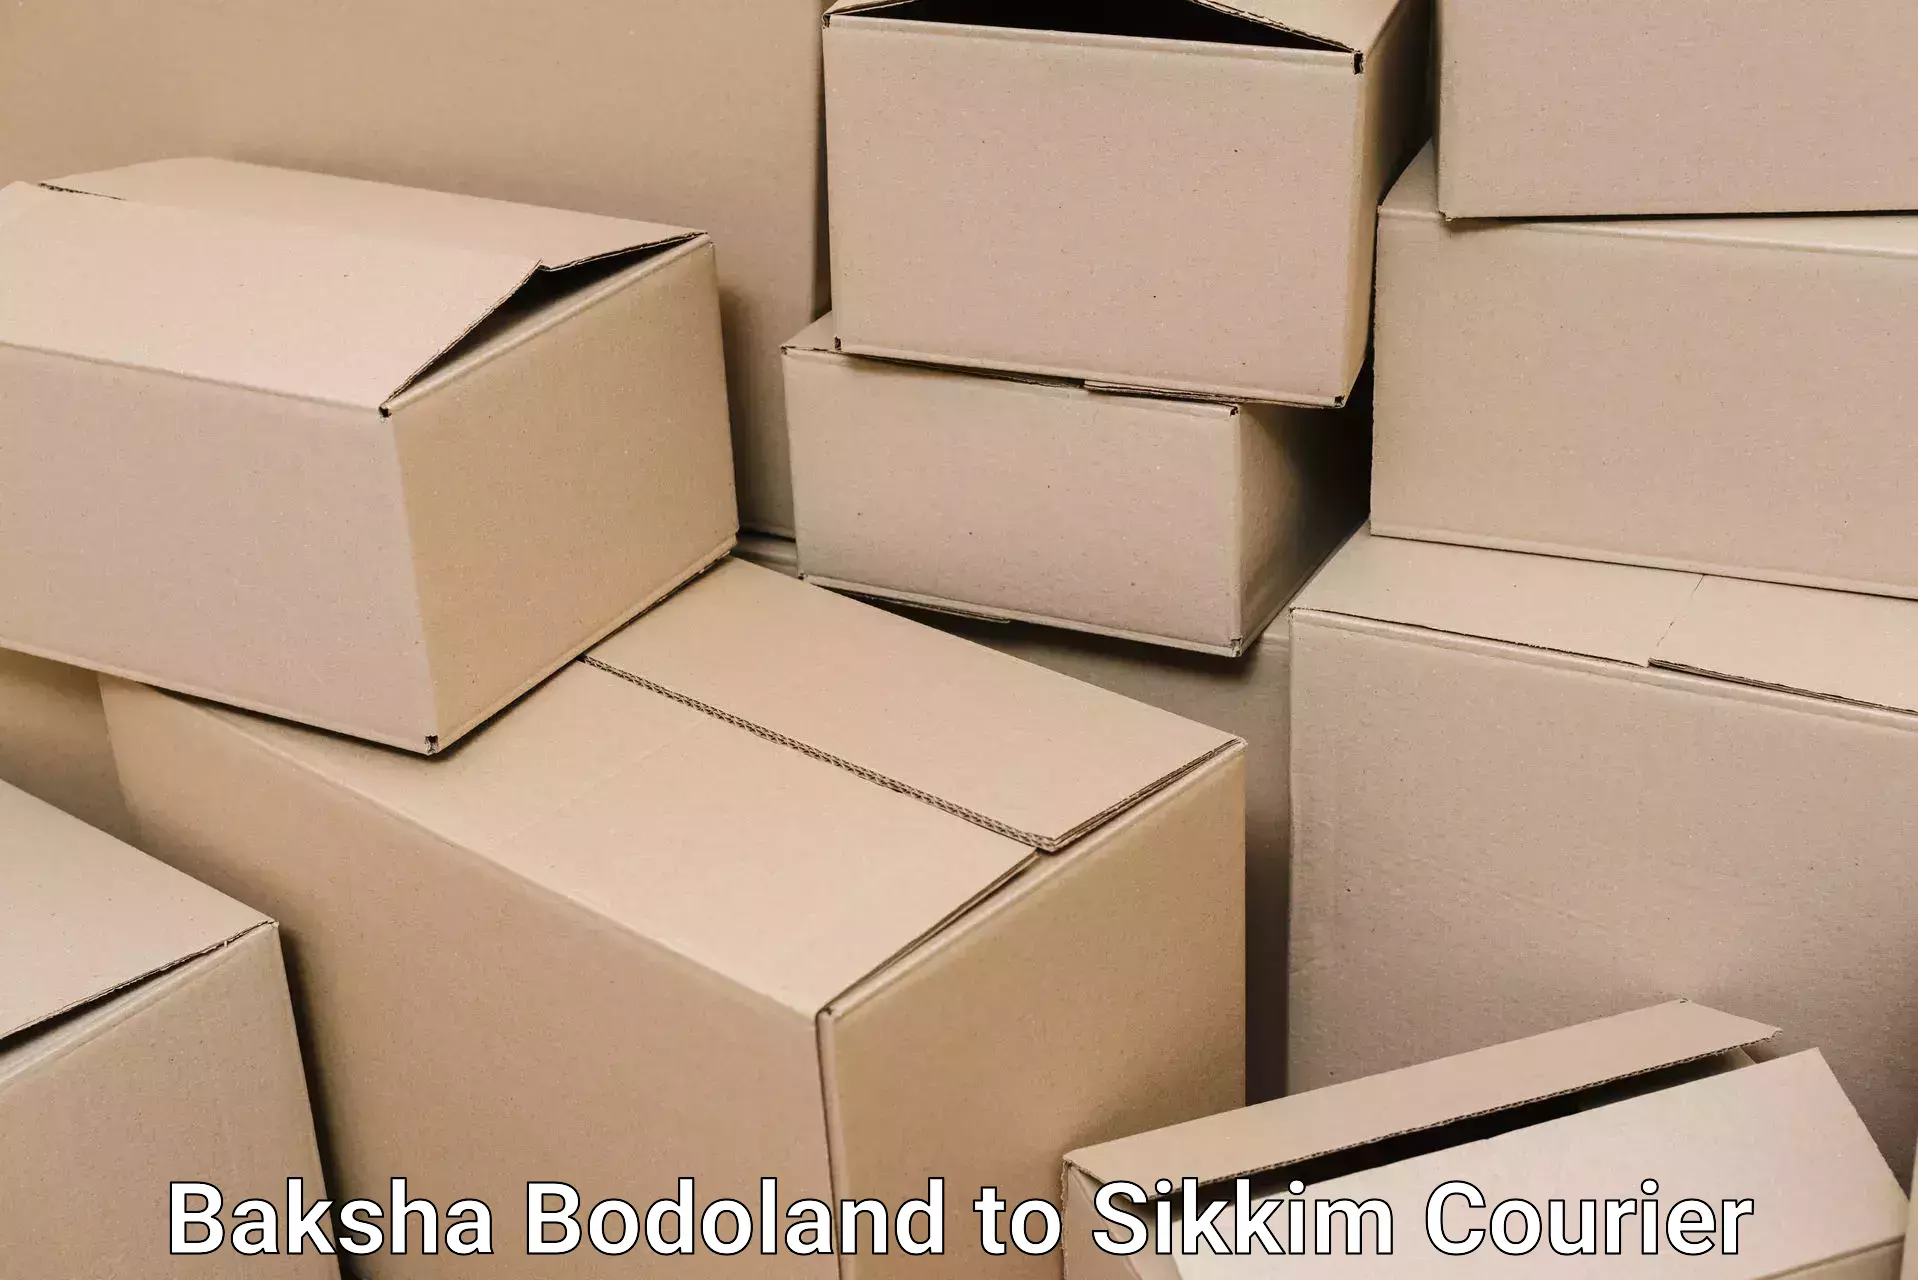 Moving and handling services Baksha Bodoland to East Sikkim